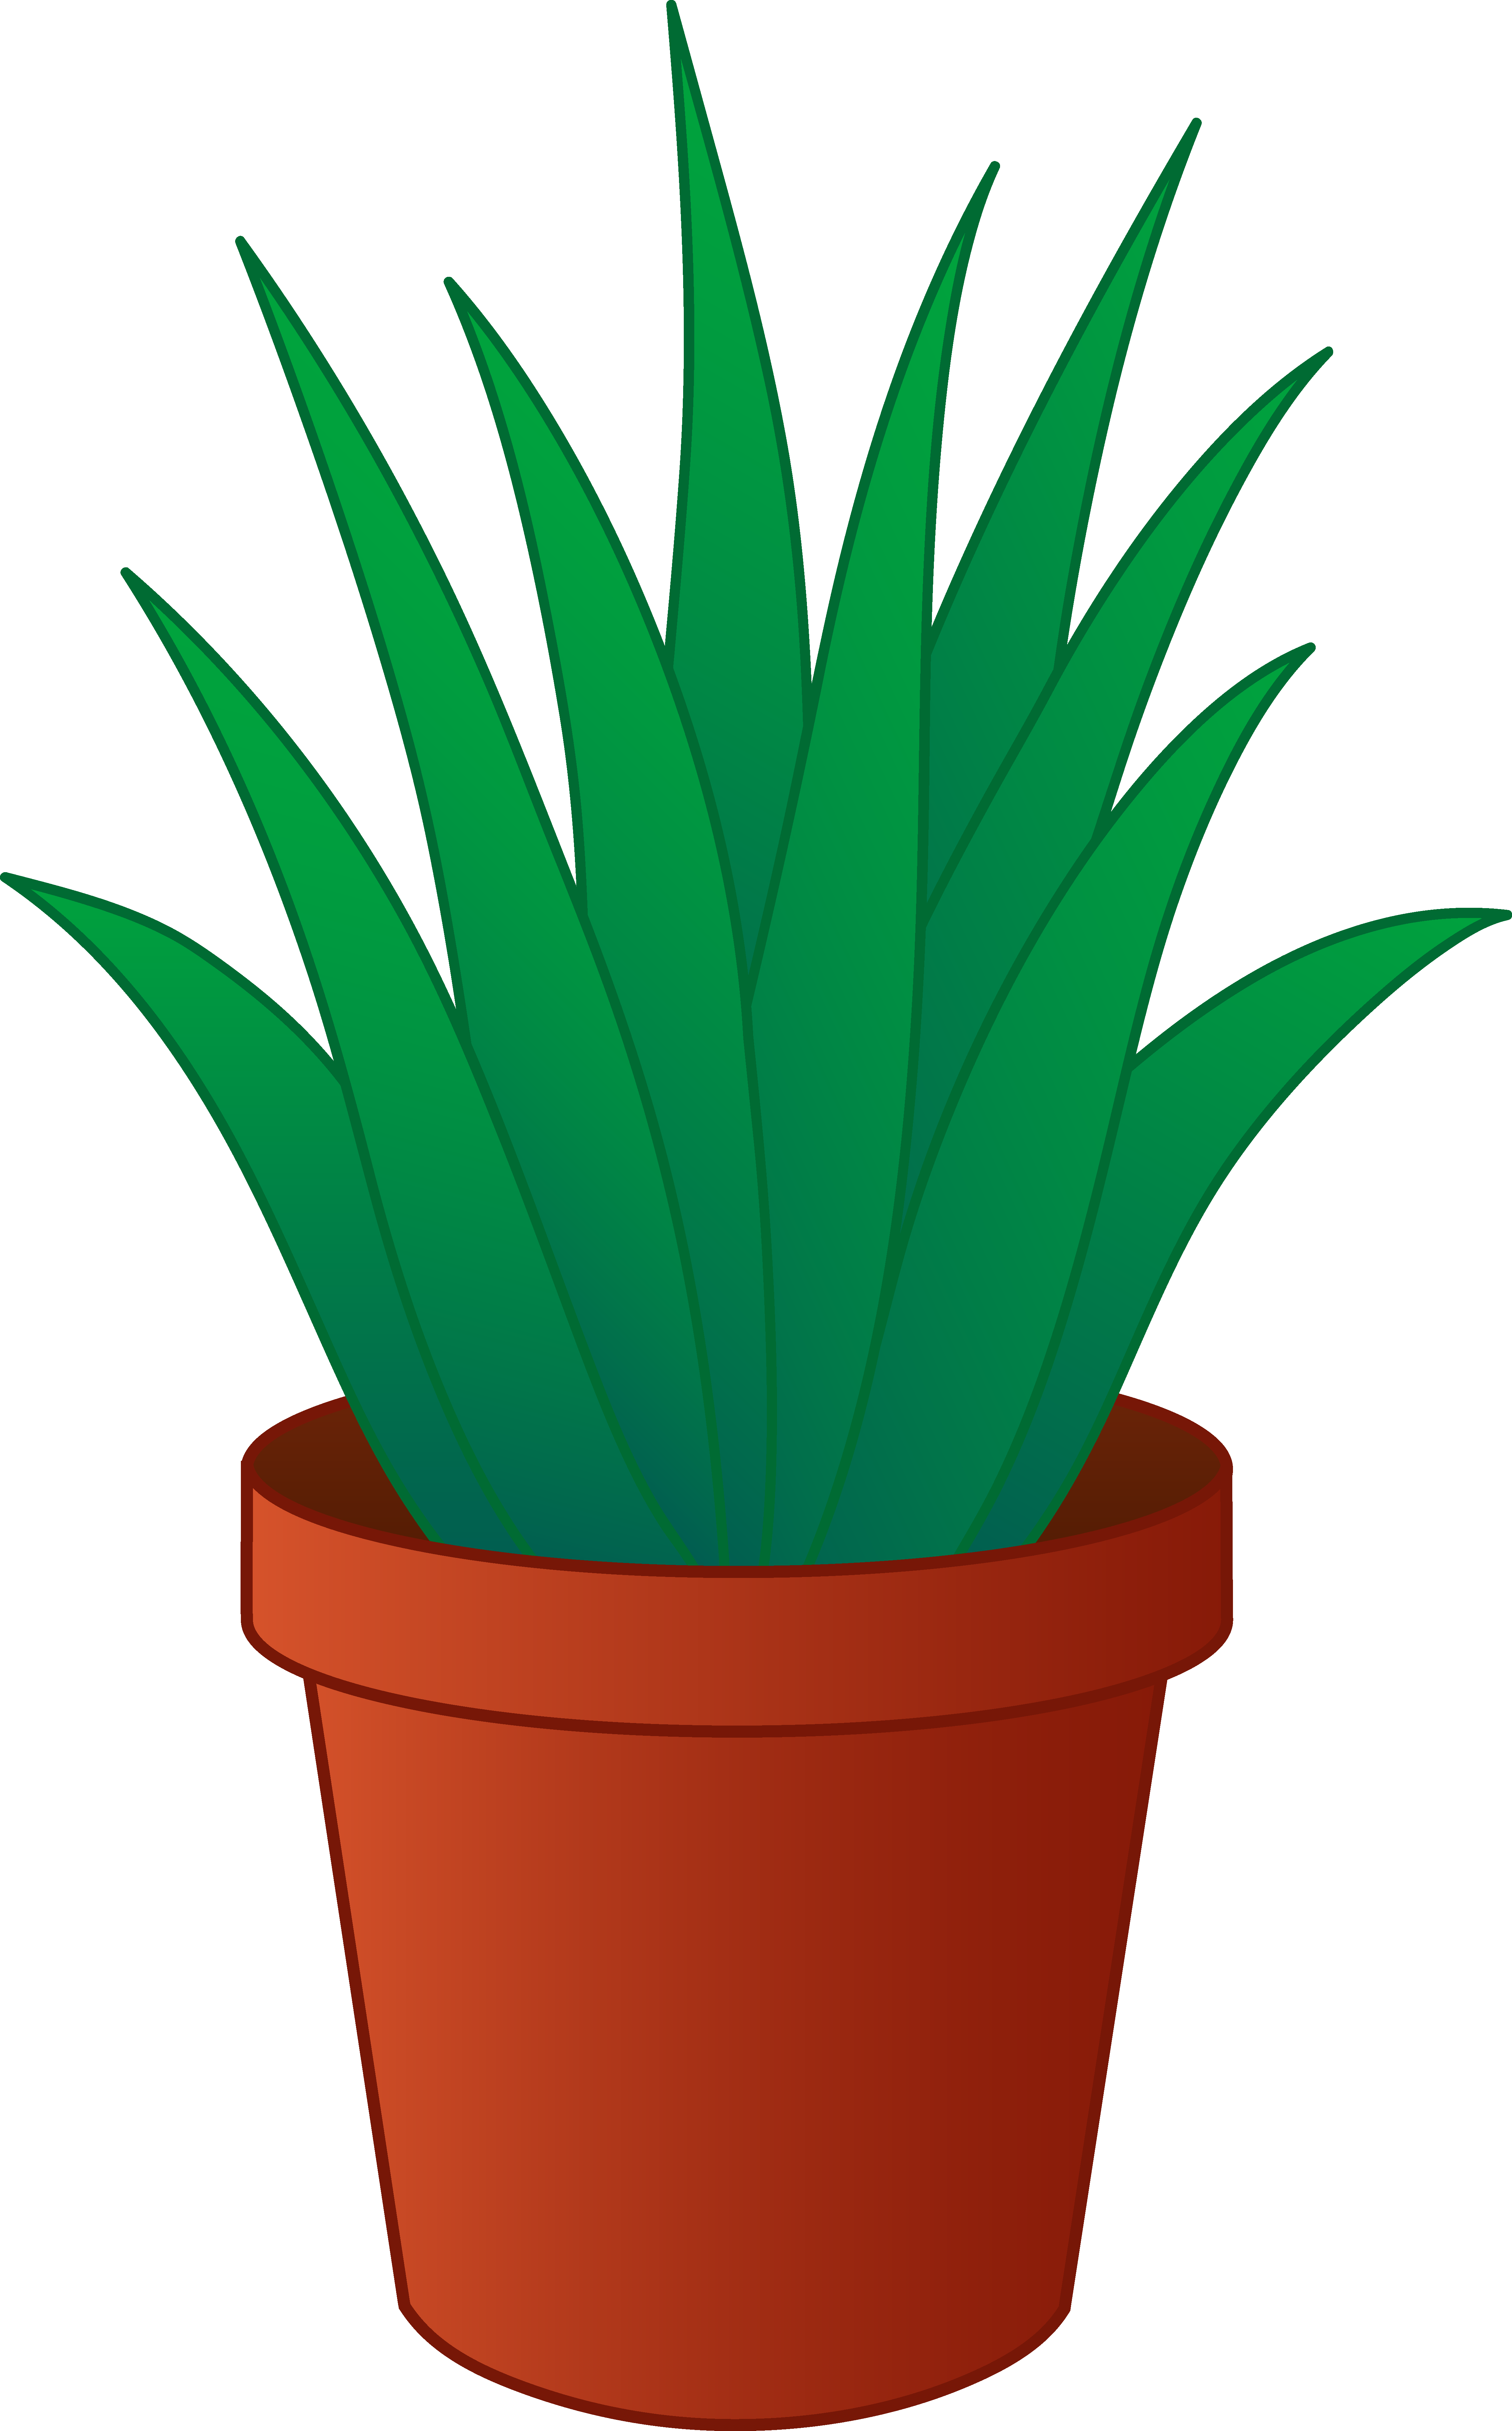 Aloe Vera Plant In Pot Clipart - Free Clip Art Images